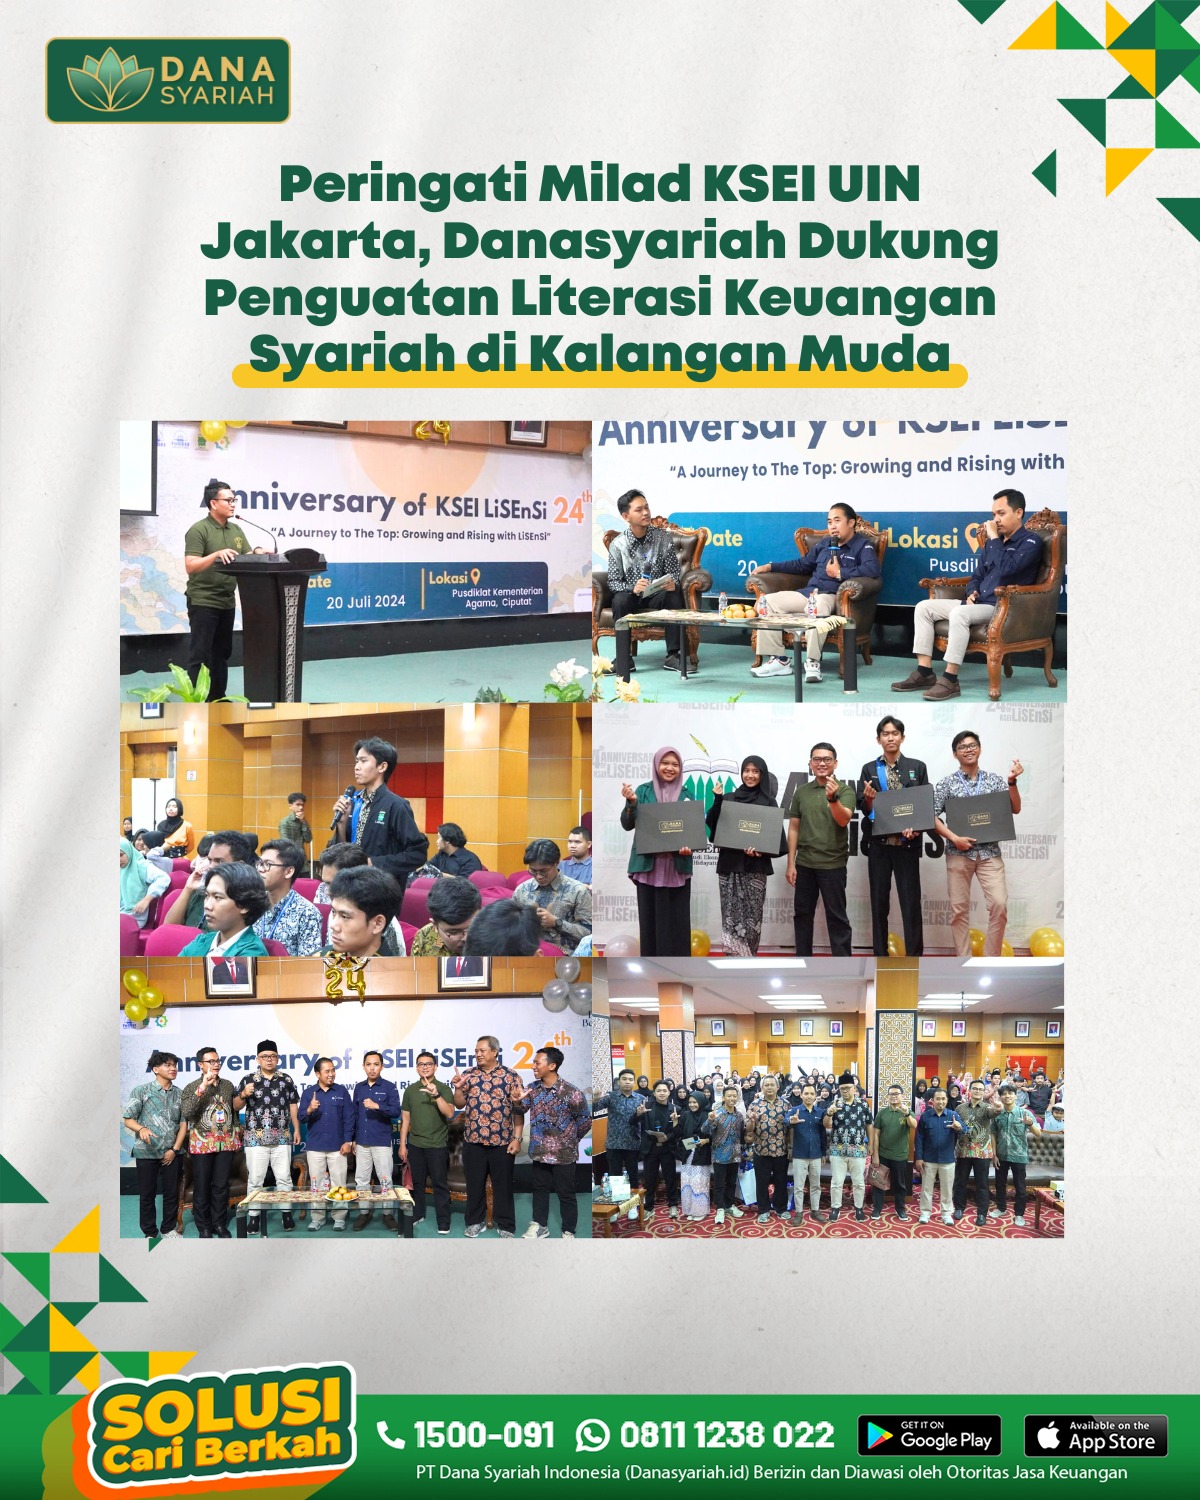 Dana Syariah Peringati Milad KSEI UIN Jakarta, Danasyariah Dukung Penguatan Literasi Keuangan Syariah di Kalangan Muda